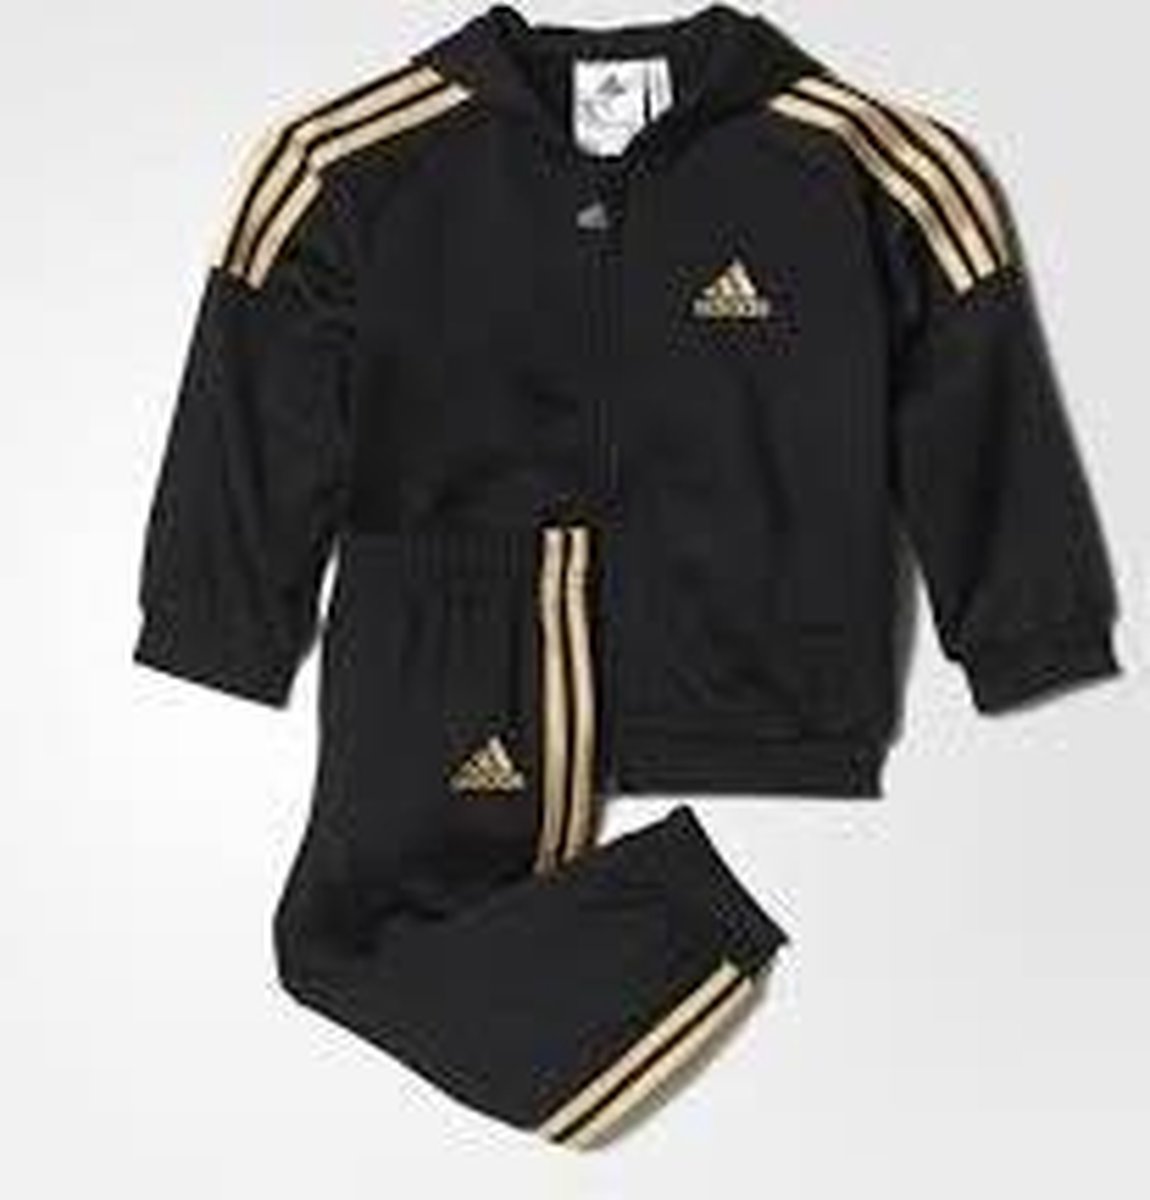 Adidas Baby Trainingspak - Black/Goud - Maat 104 | bol.com